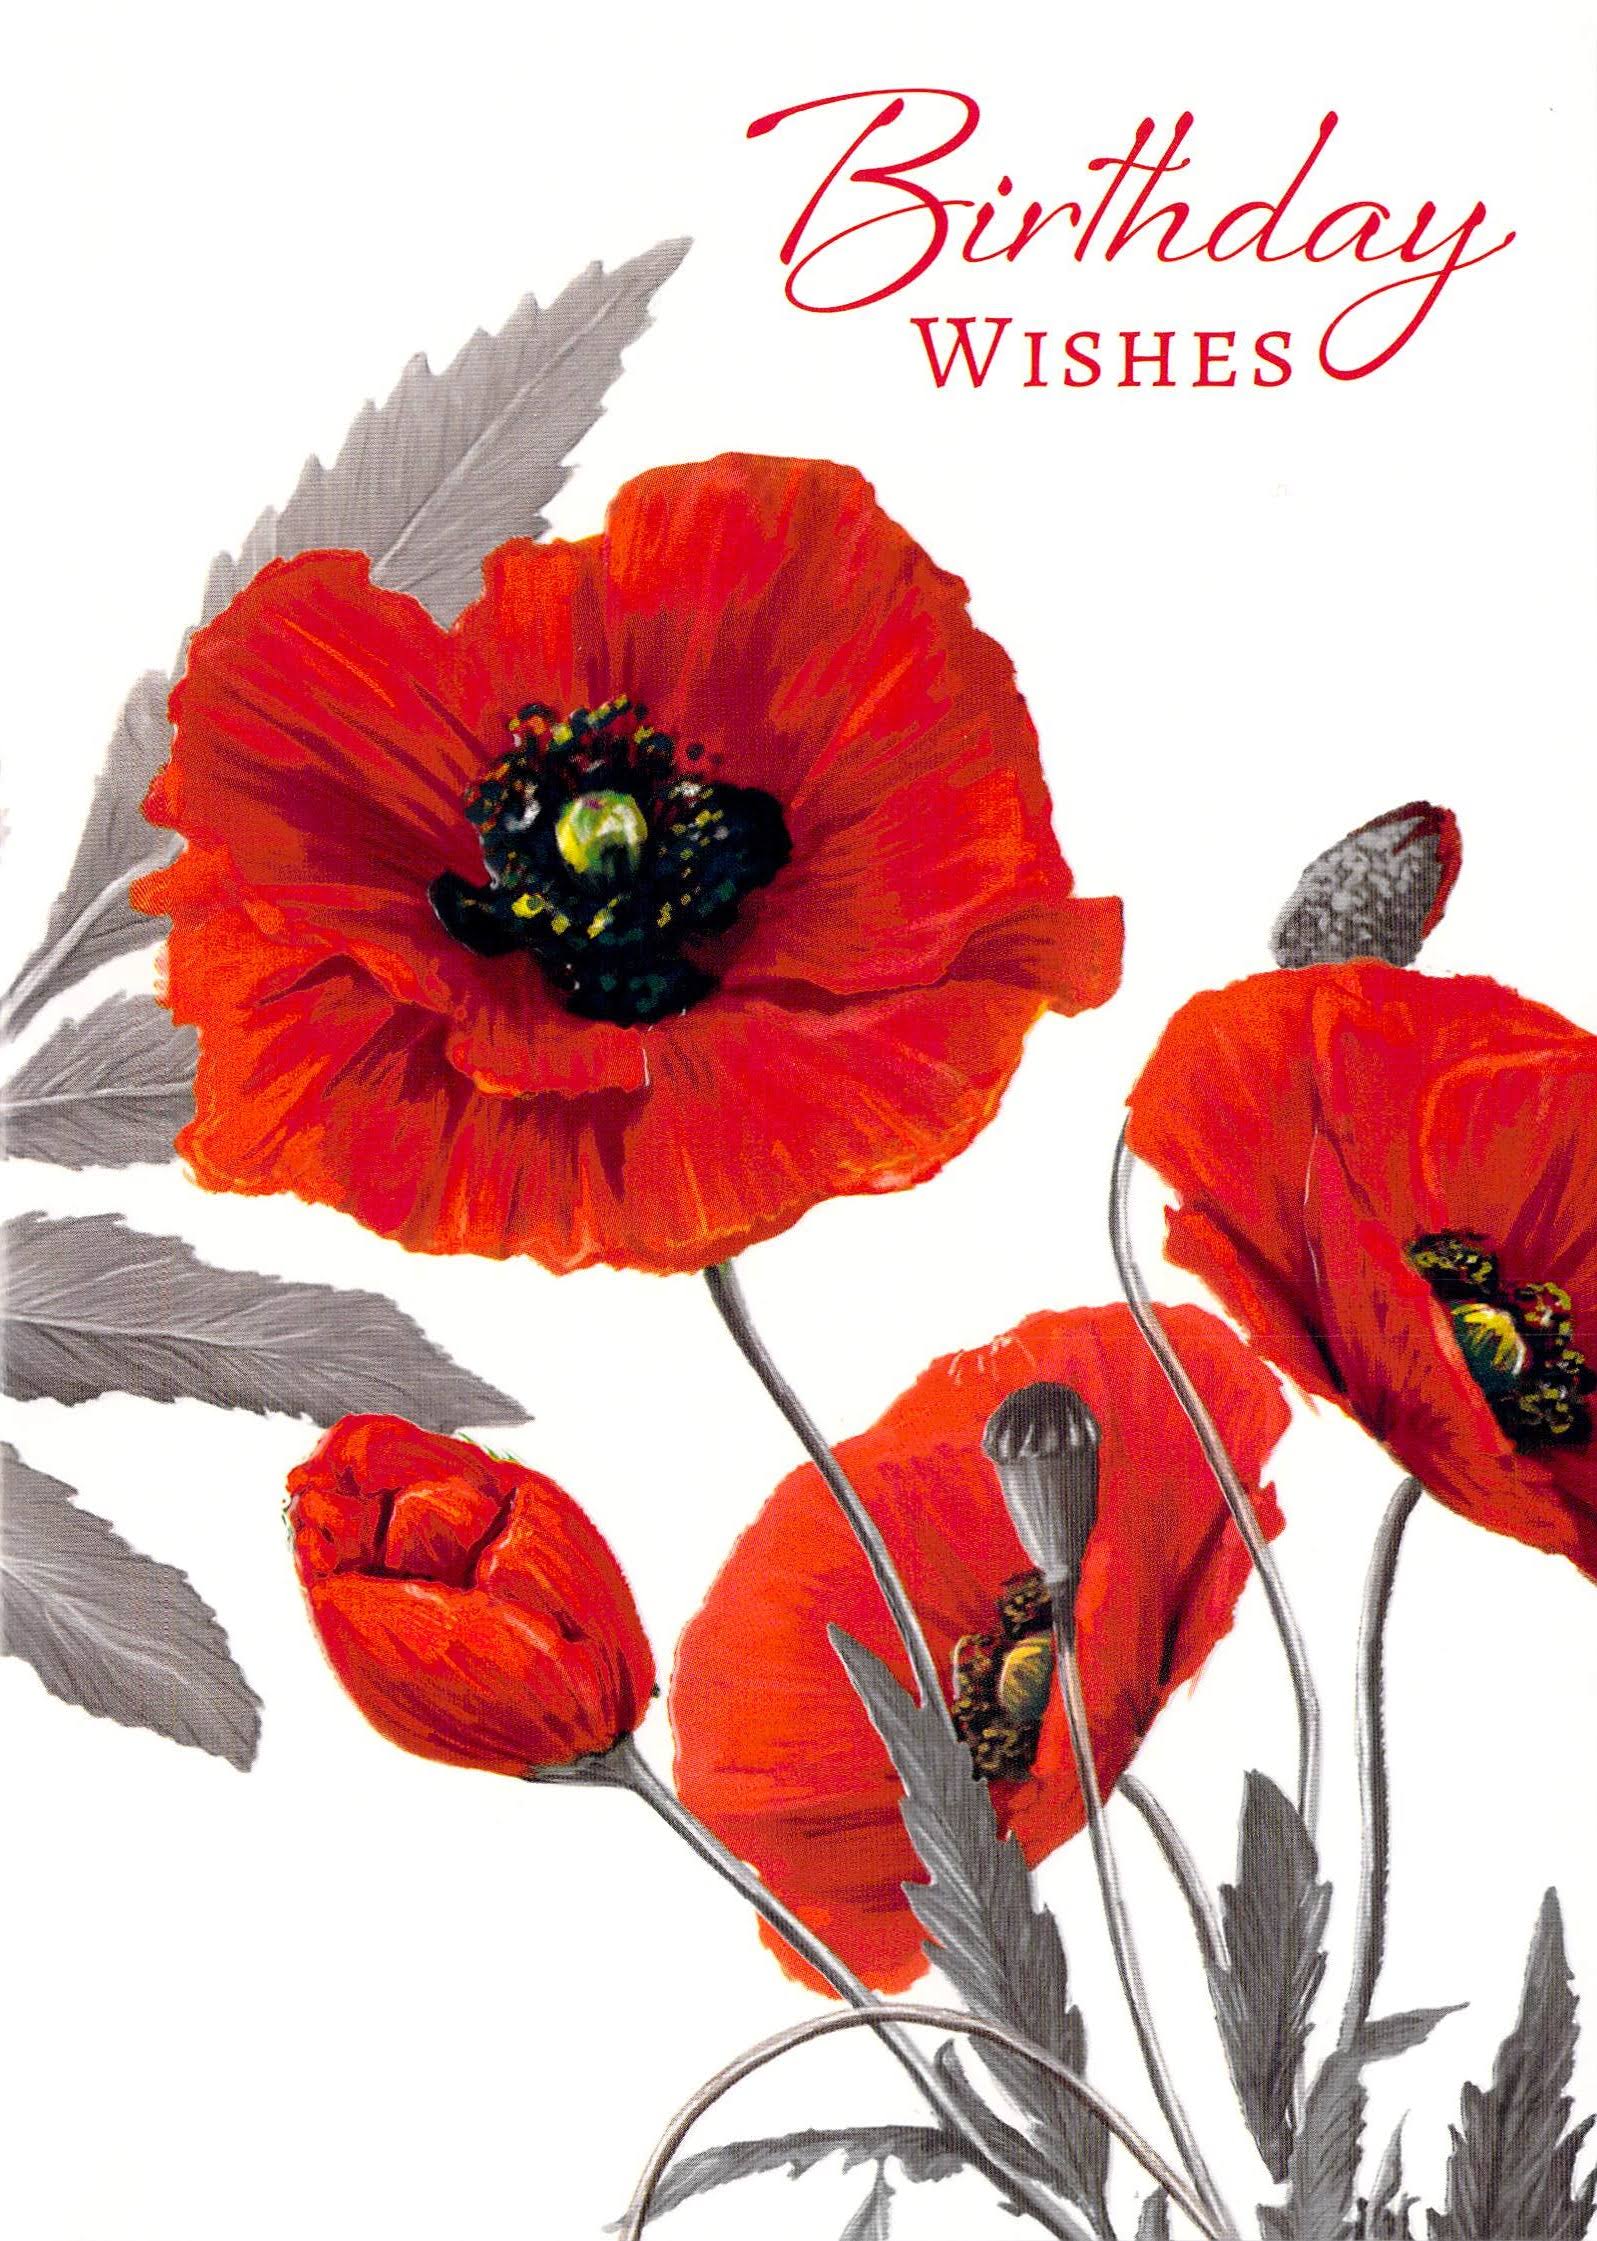 Friend / Open Card - Happy Birthday - Greeting Card - Flowers